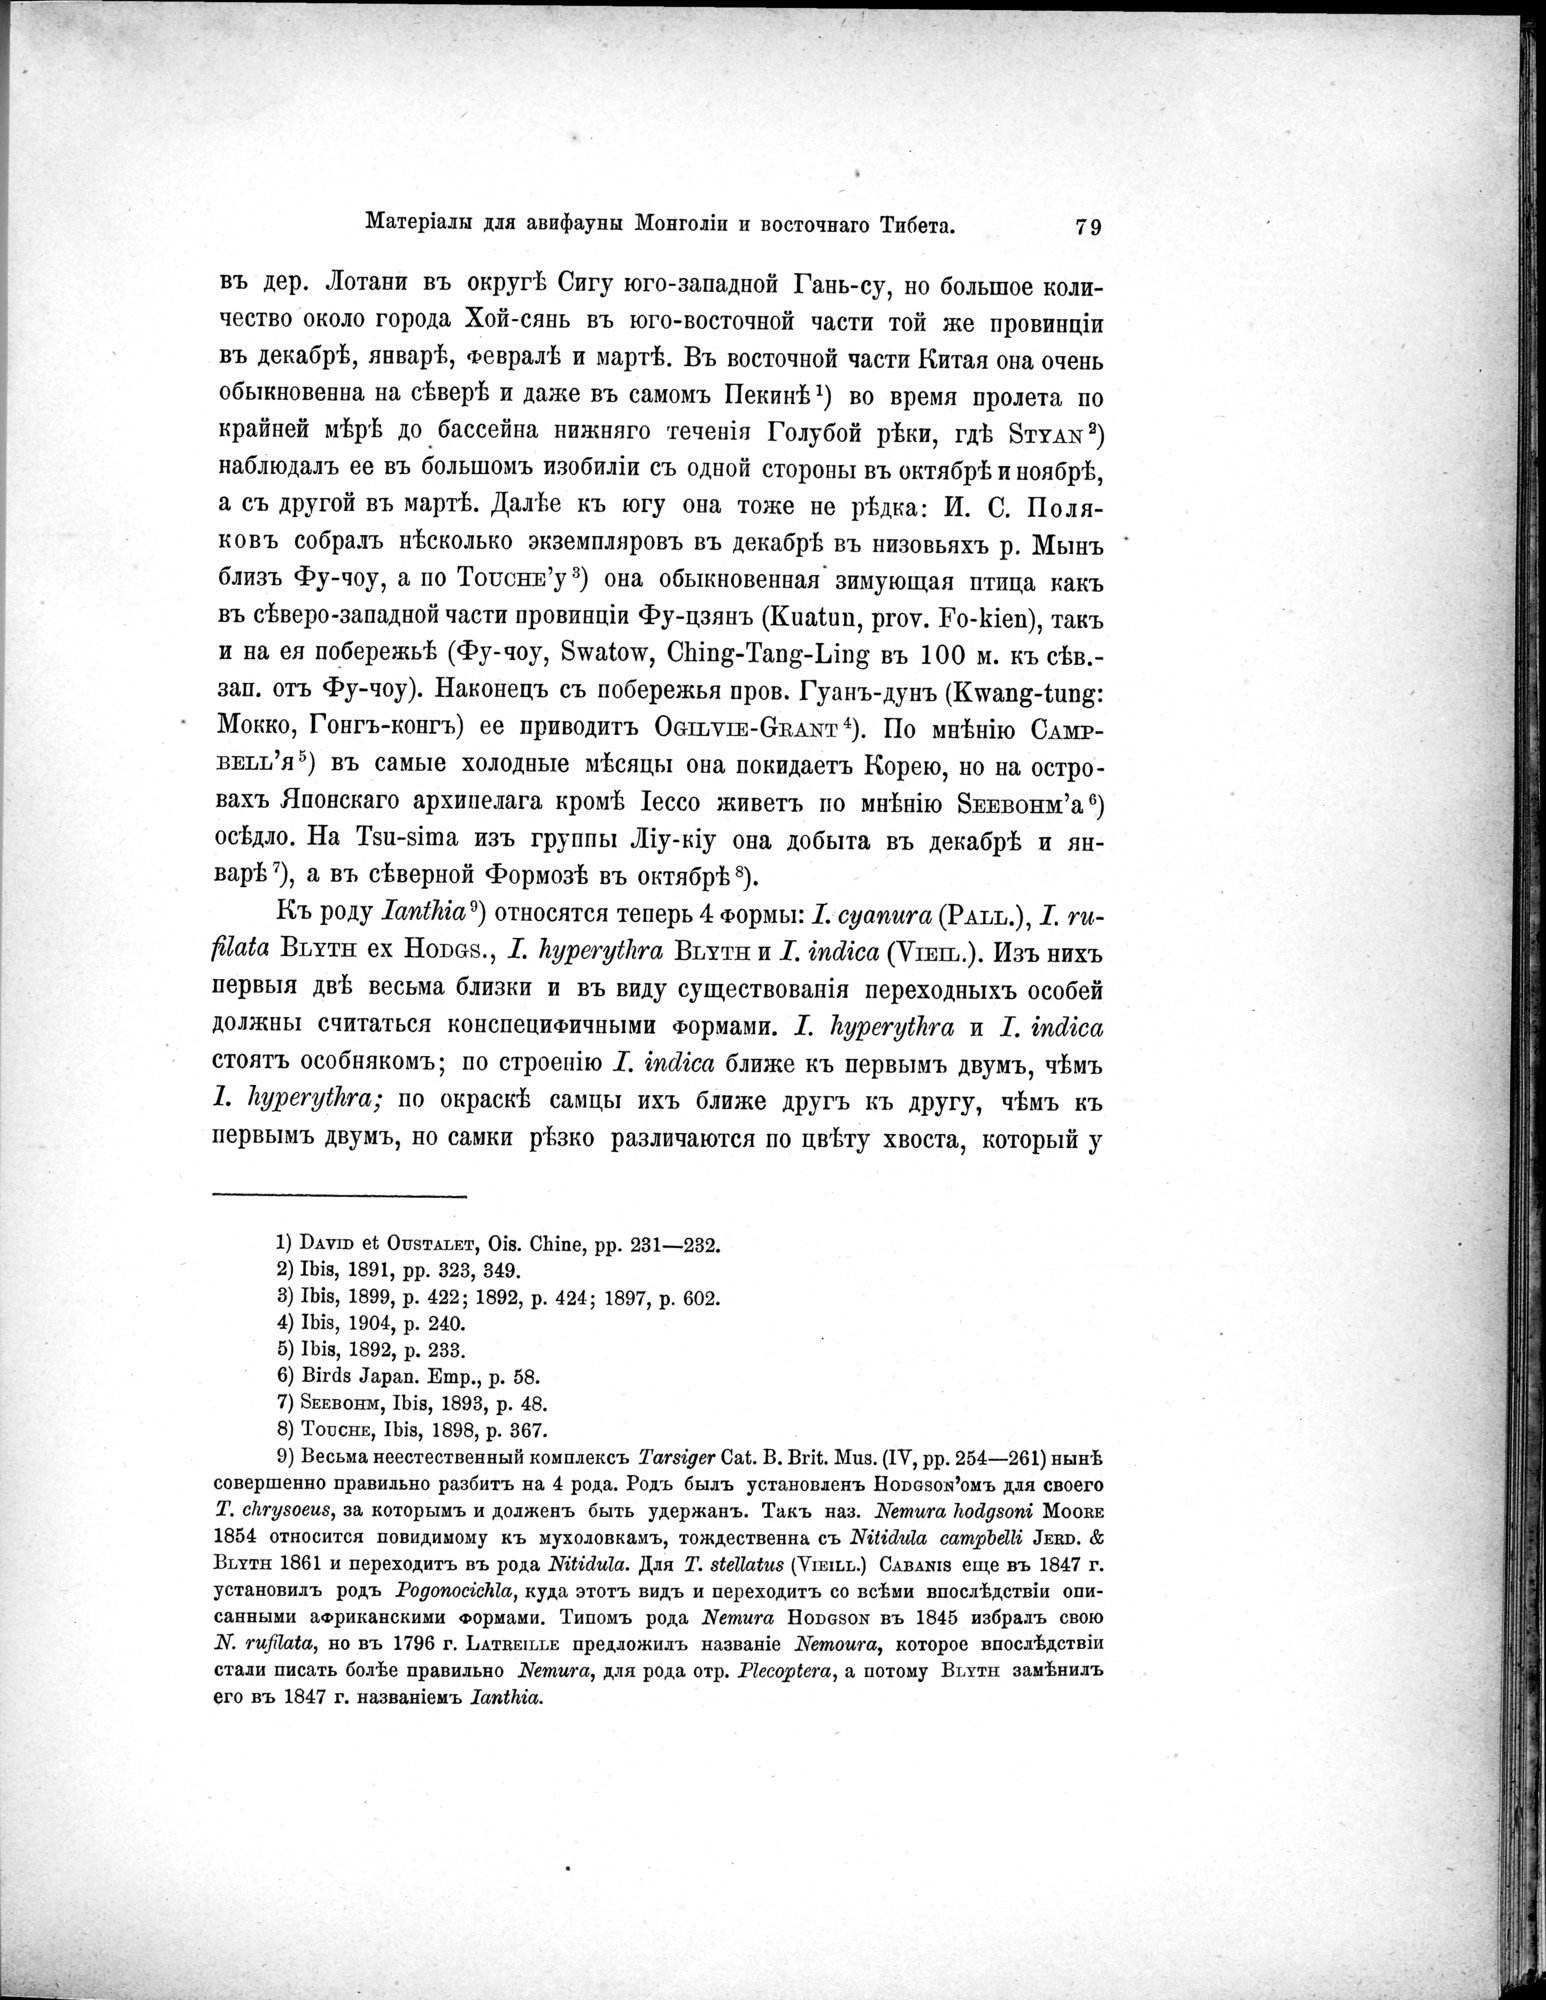 Mongoliia i Kam : vol.5 / Page 151 (Grayscale High Resolution Image)